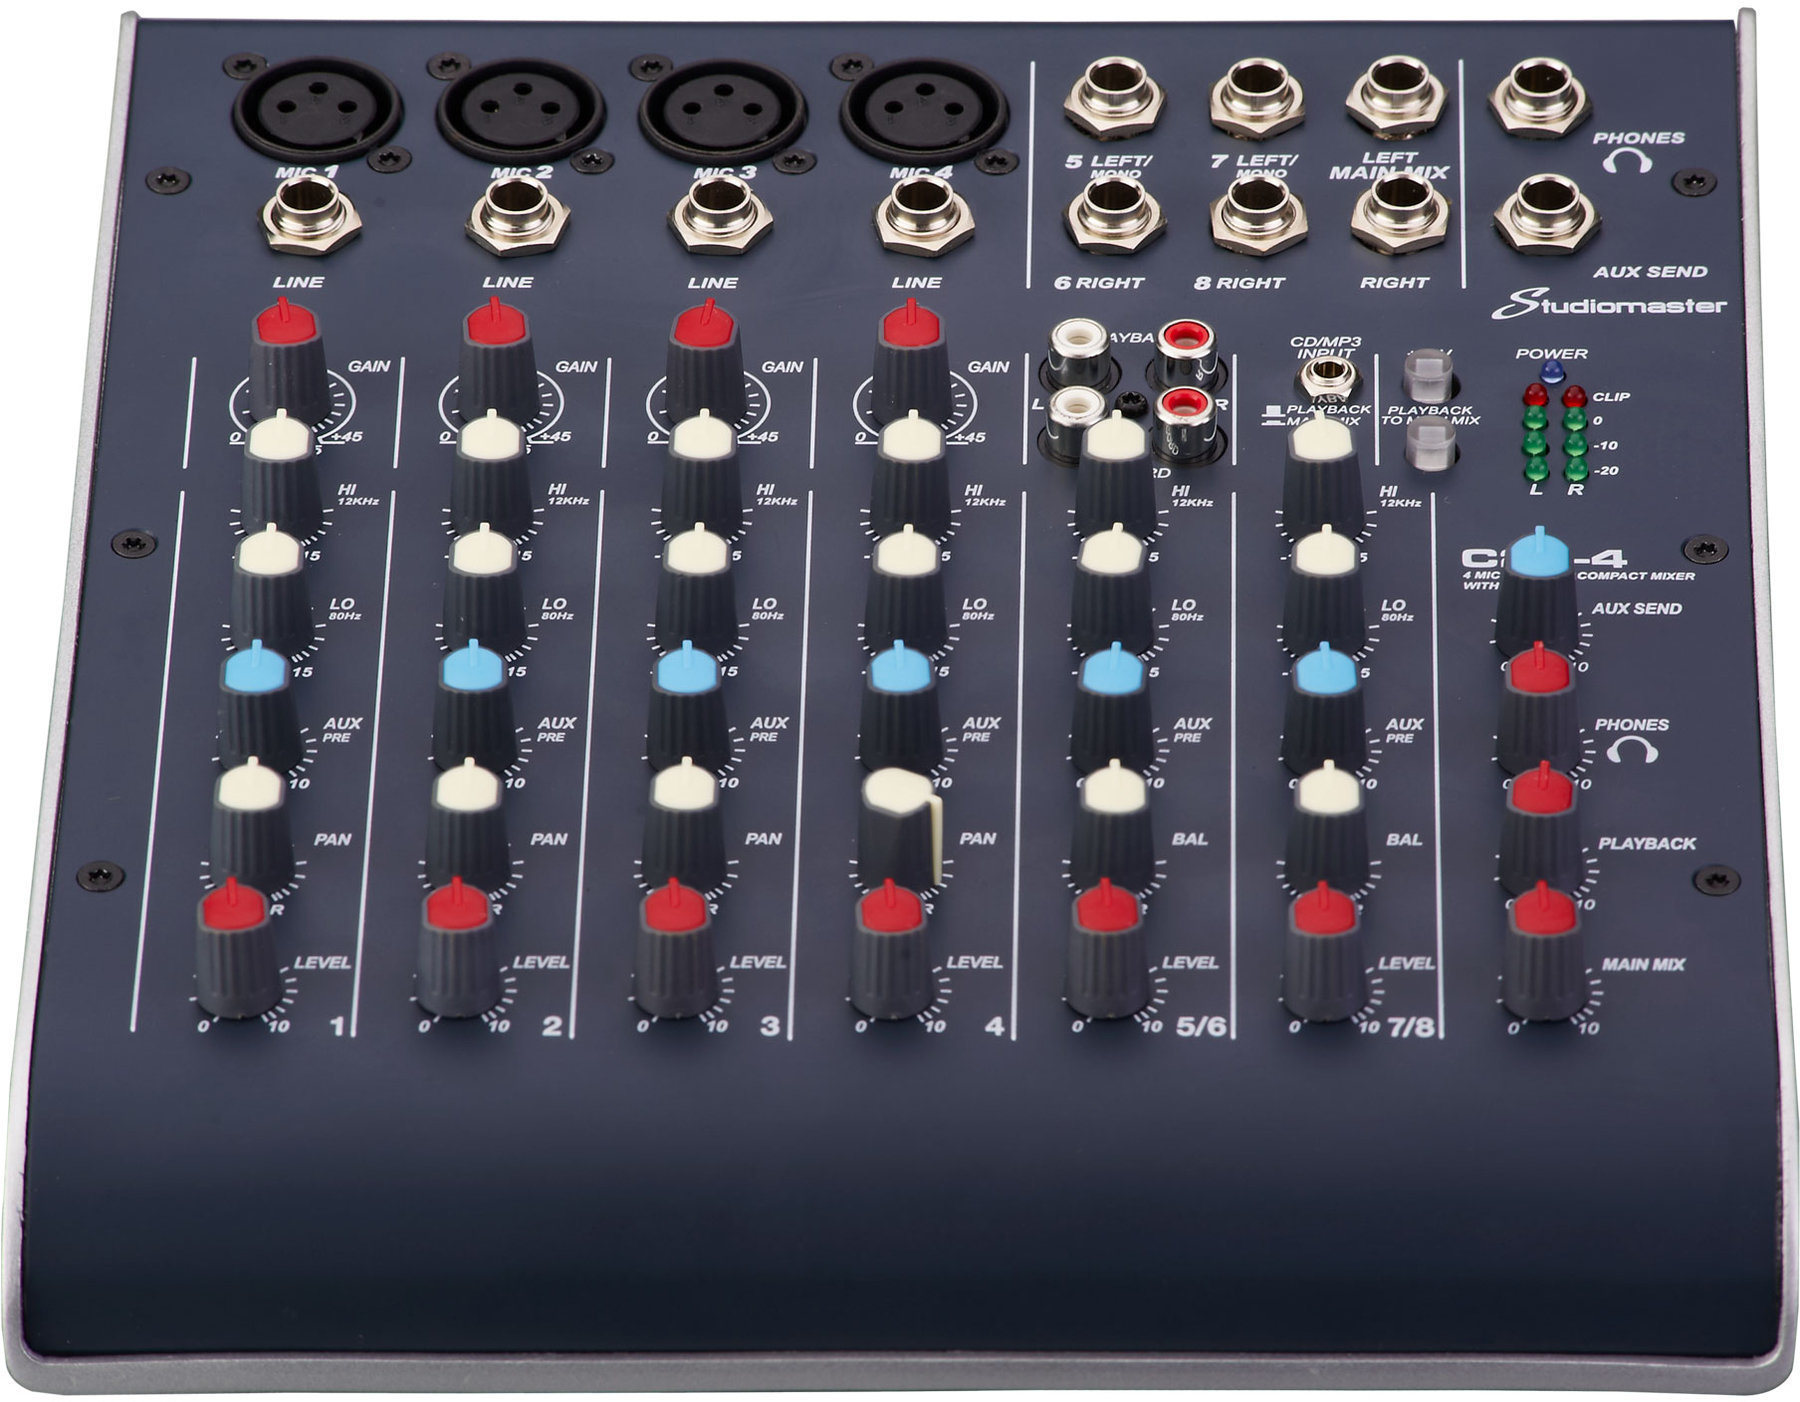 Table de mixage analogique Studiomaster C2-4